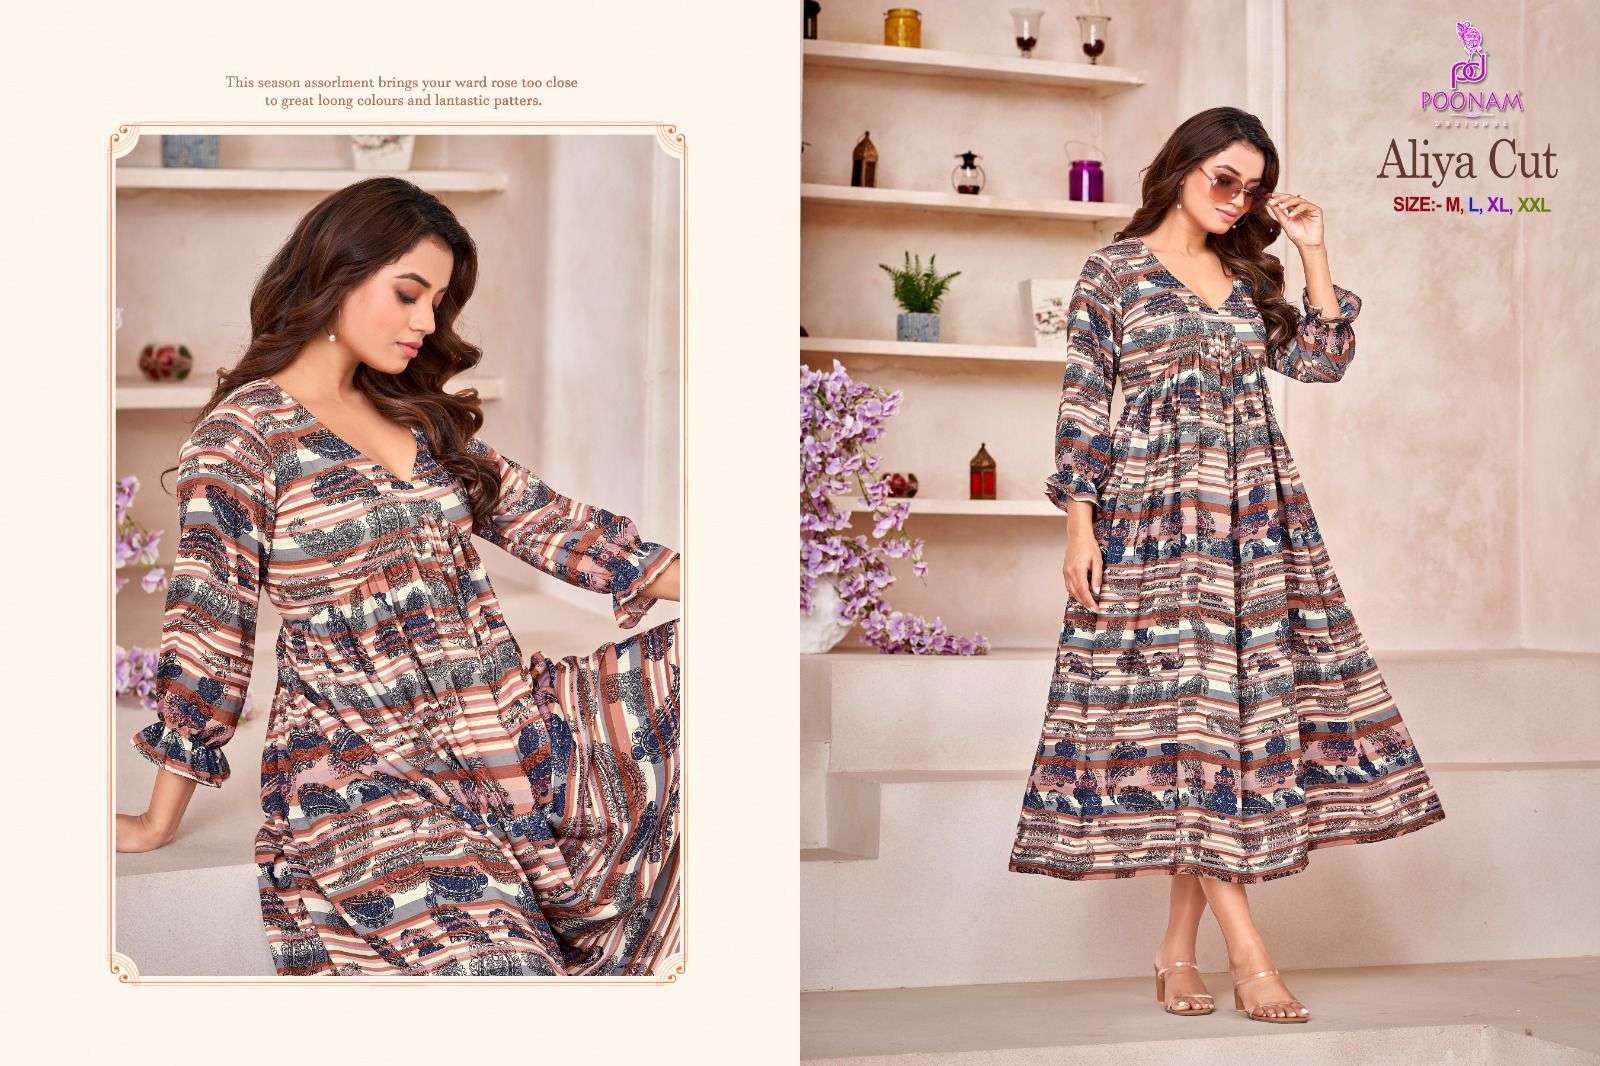 poonam designer aliya cut 1001-1004 series imported viscose printed rayon fabric aliya cut gown latest collection surat 